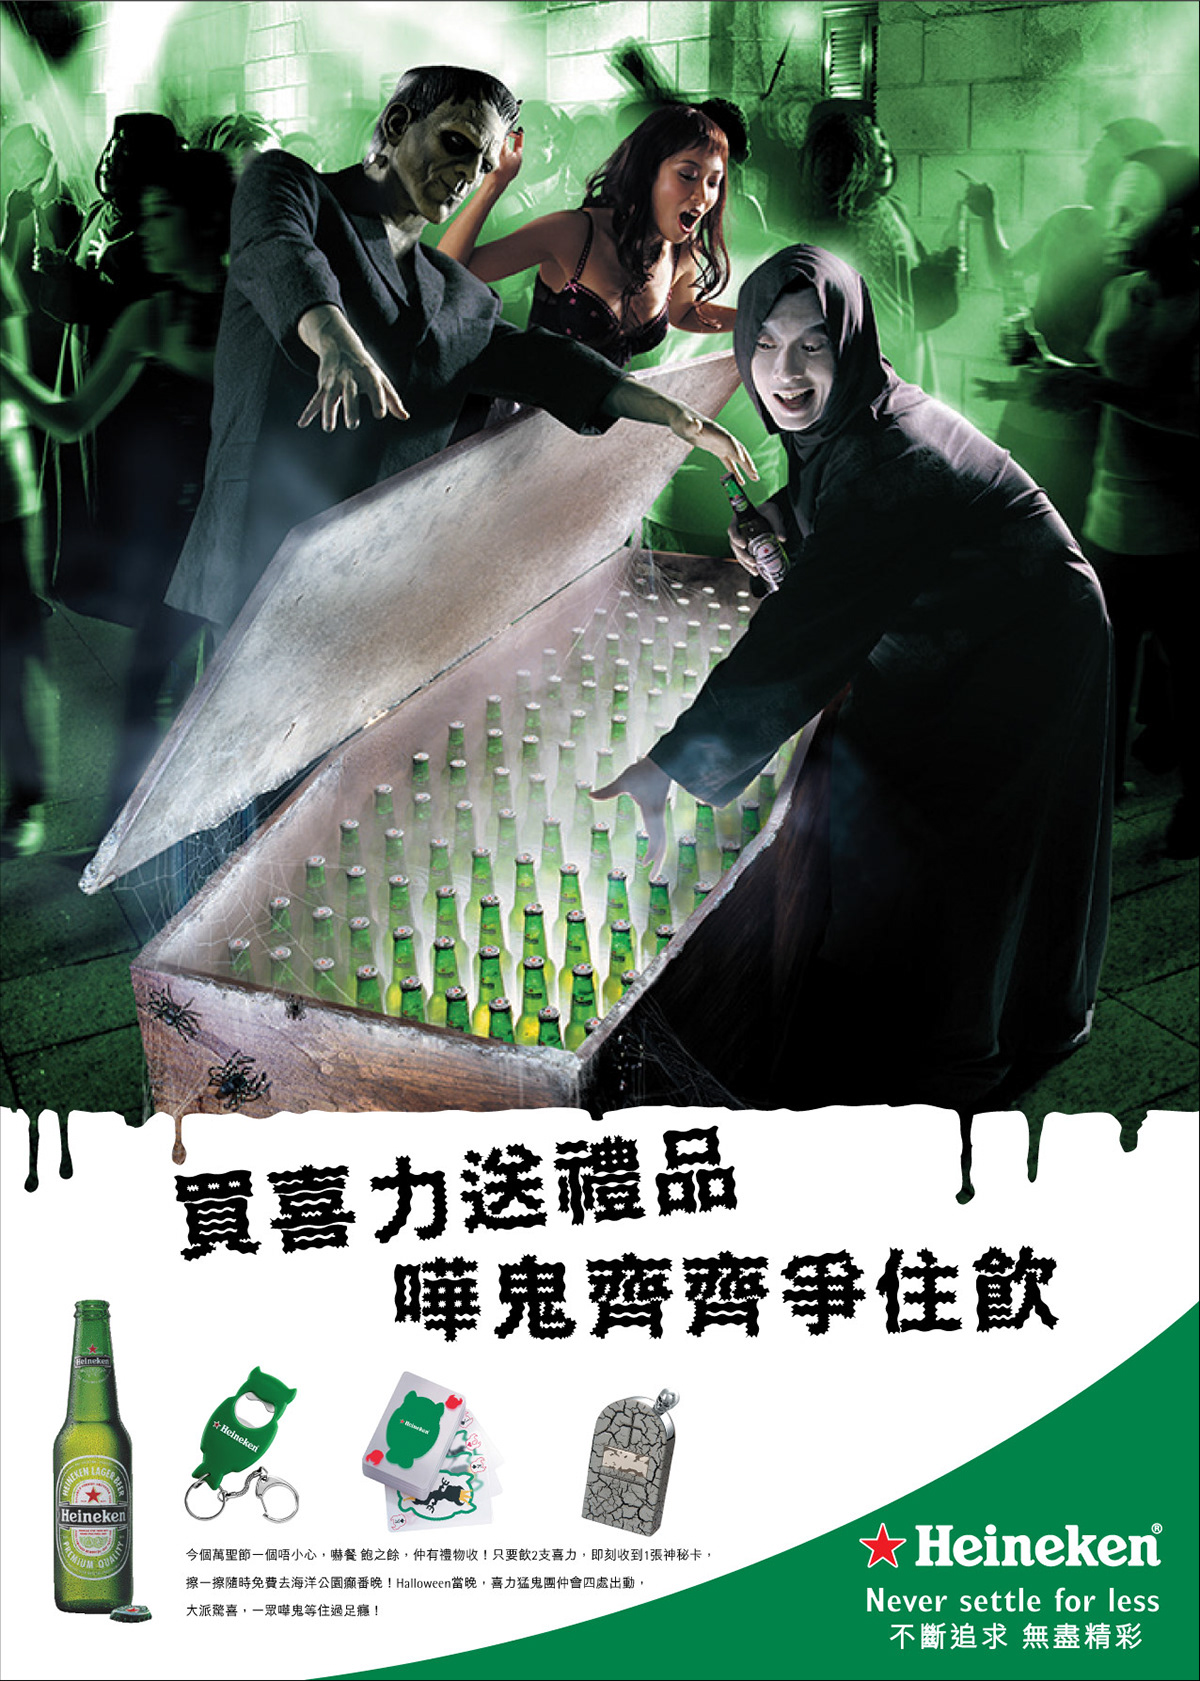 heineken Halloween beer Hong Kong